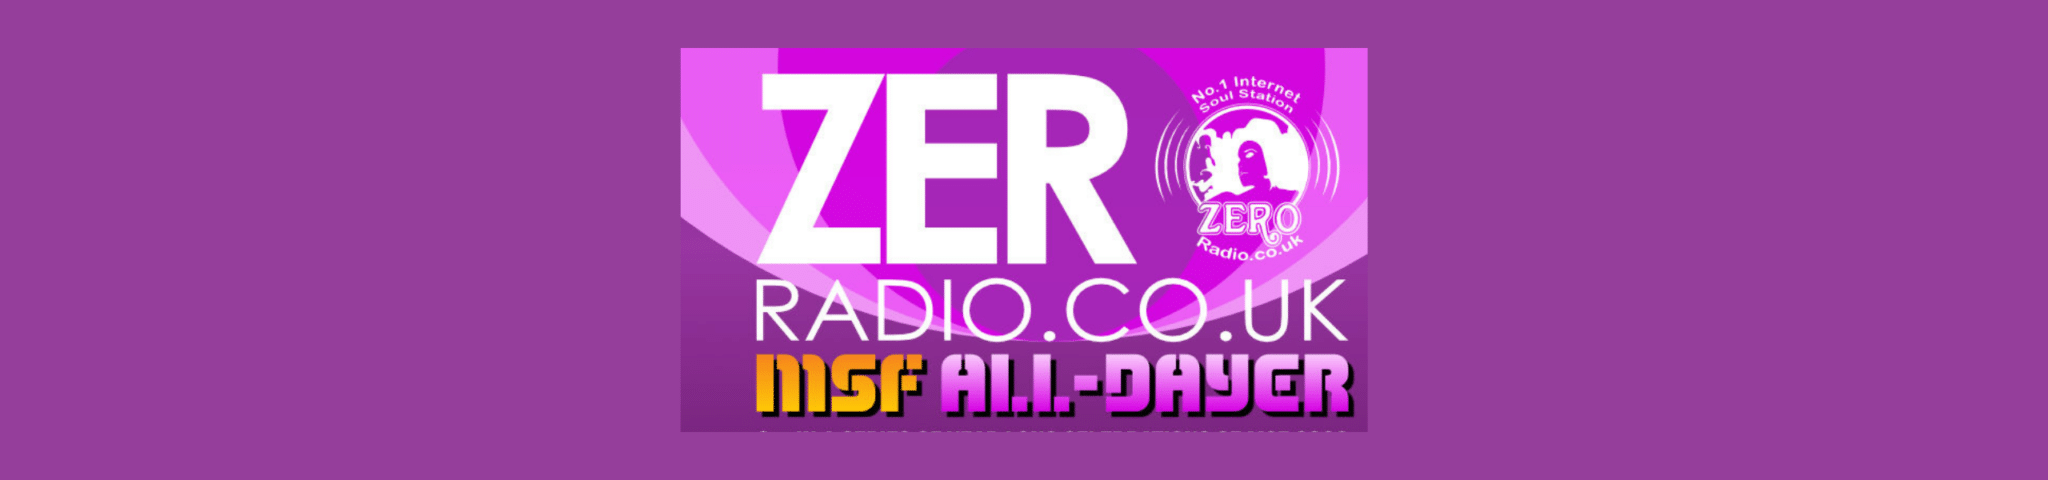 MSF & ZERO RADIO ALL-DAYER